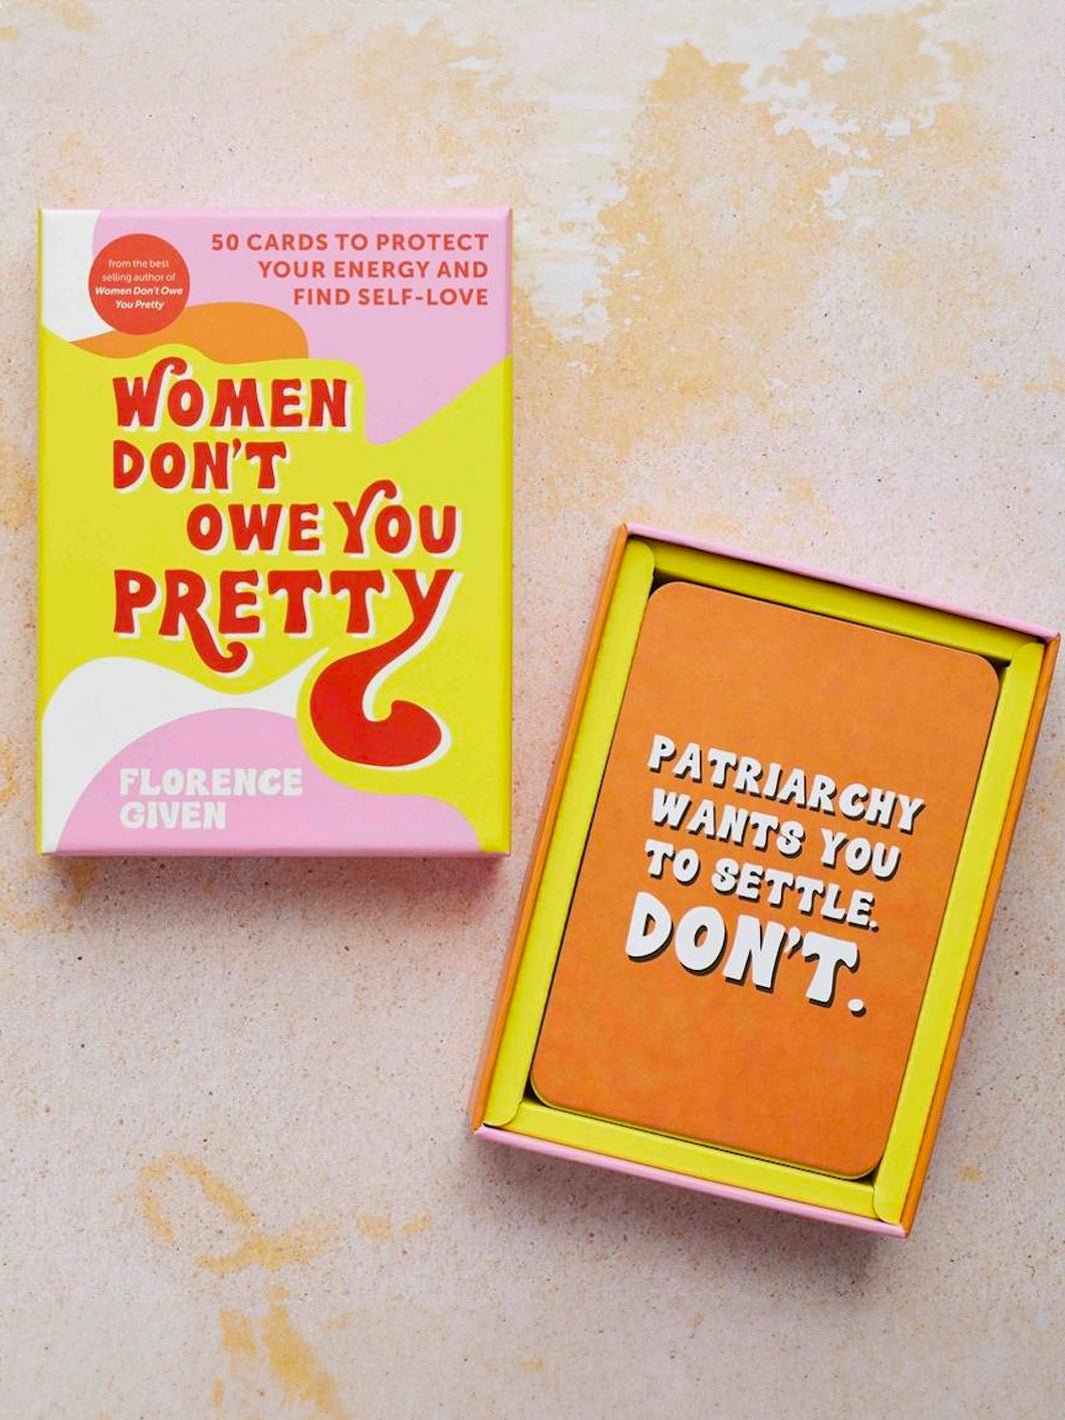 WOMEN DON'T OWE YOU PRETTY GUIDANCE CARDS